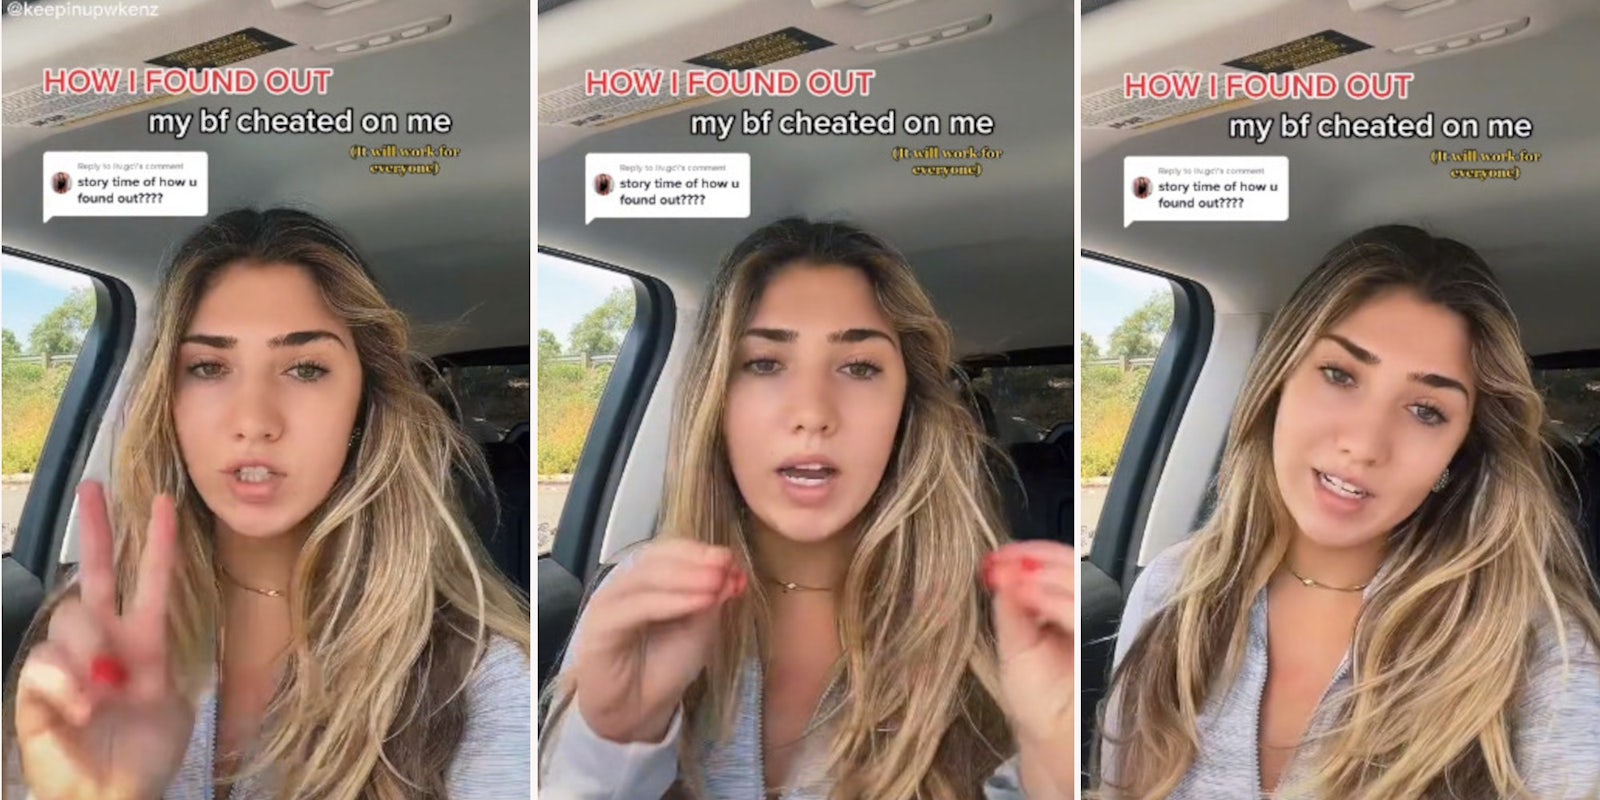 Cheating boyfriend exposed Snapchat hack